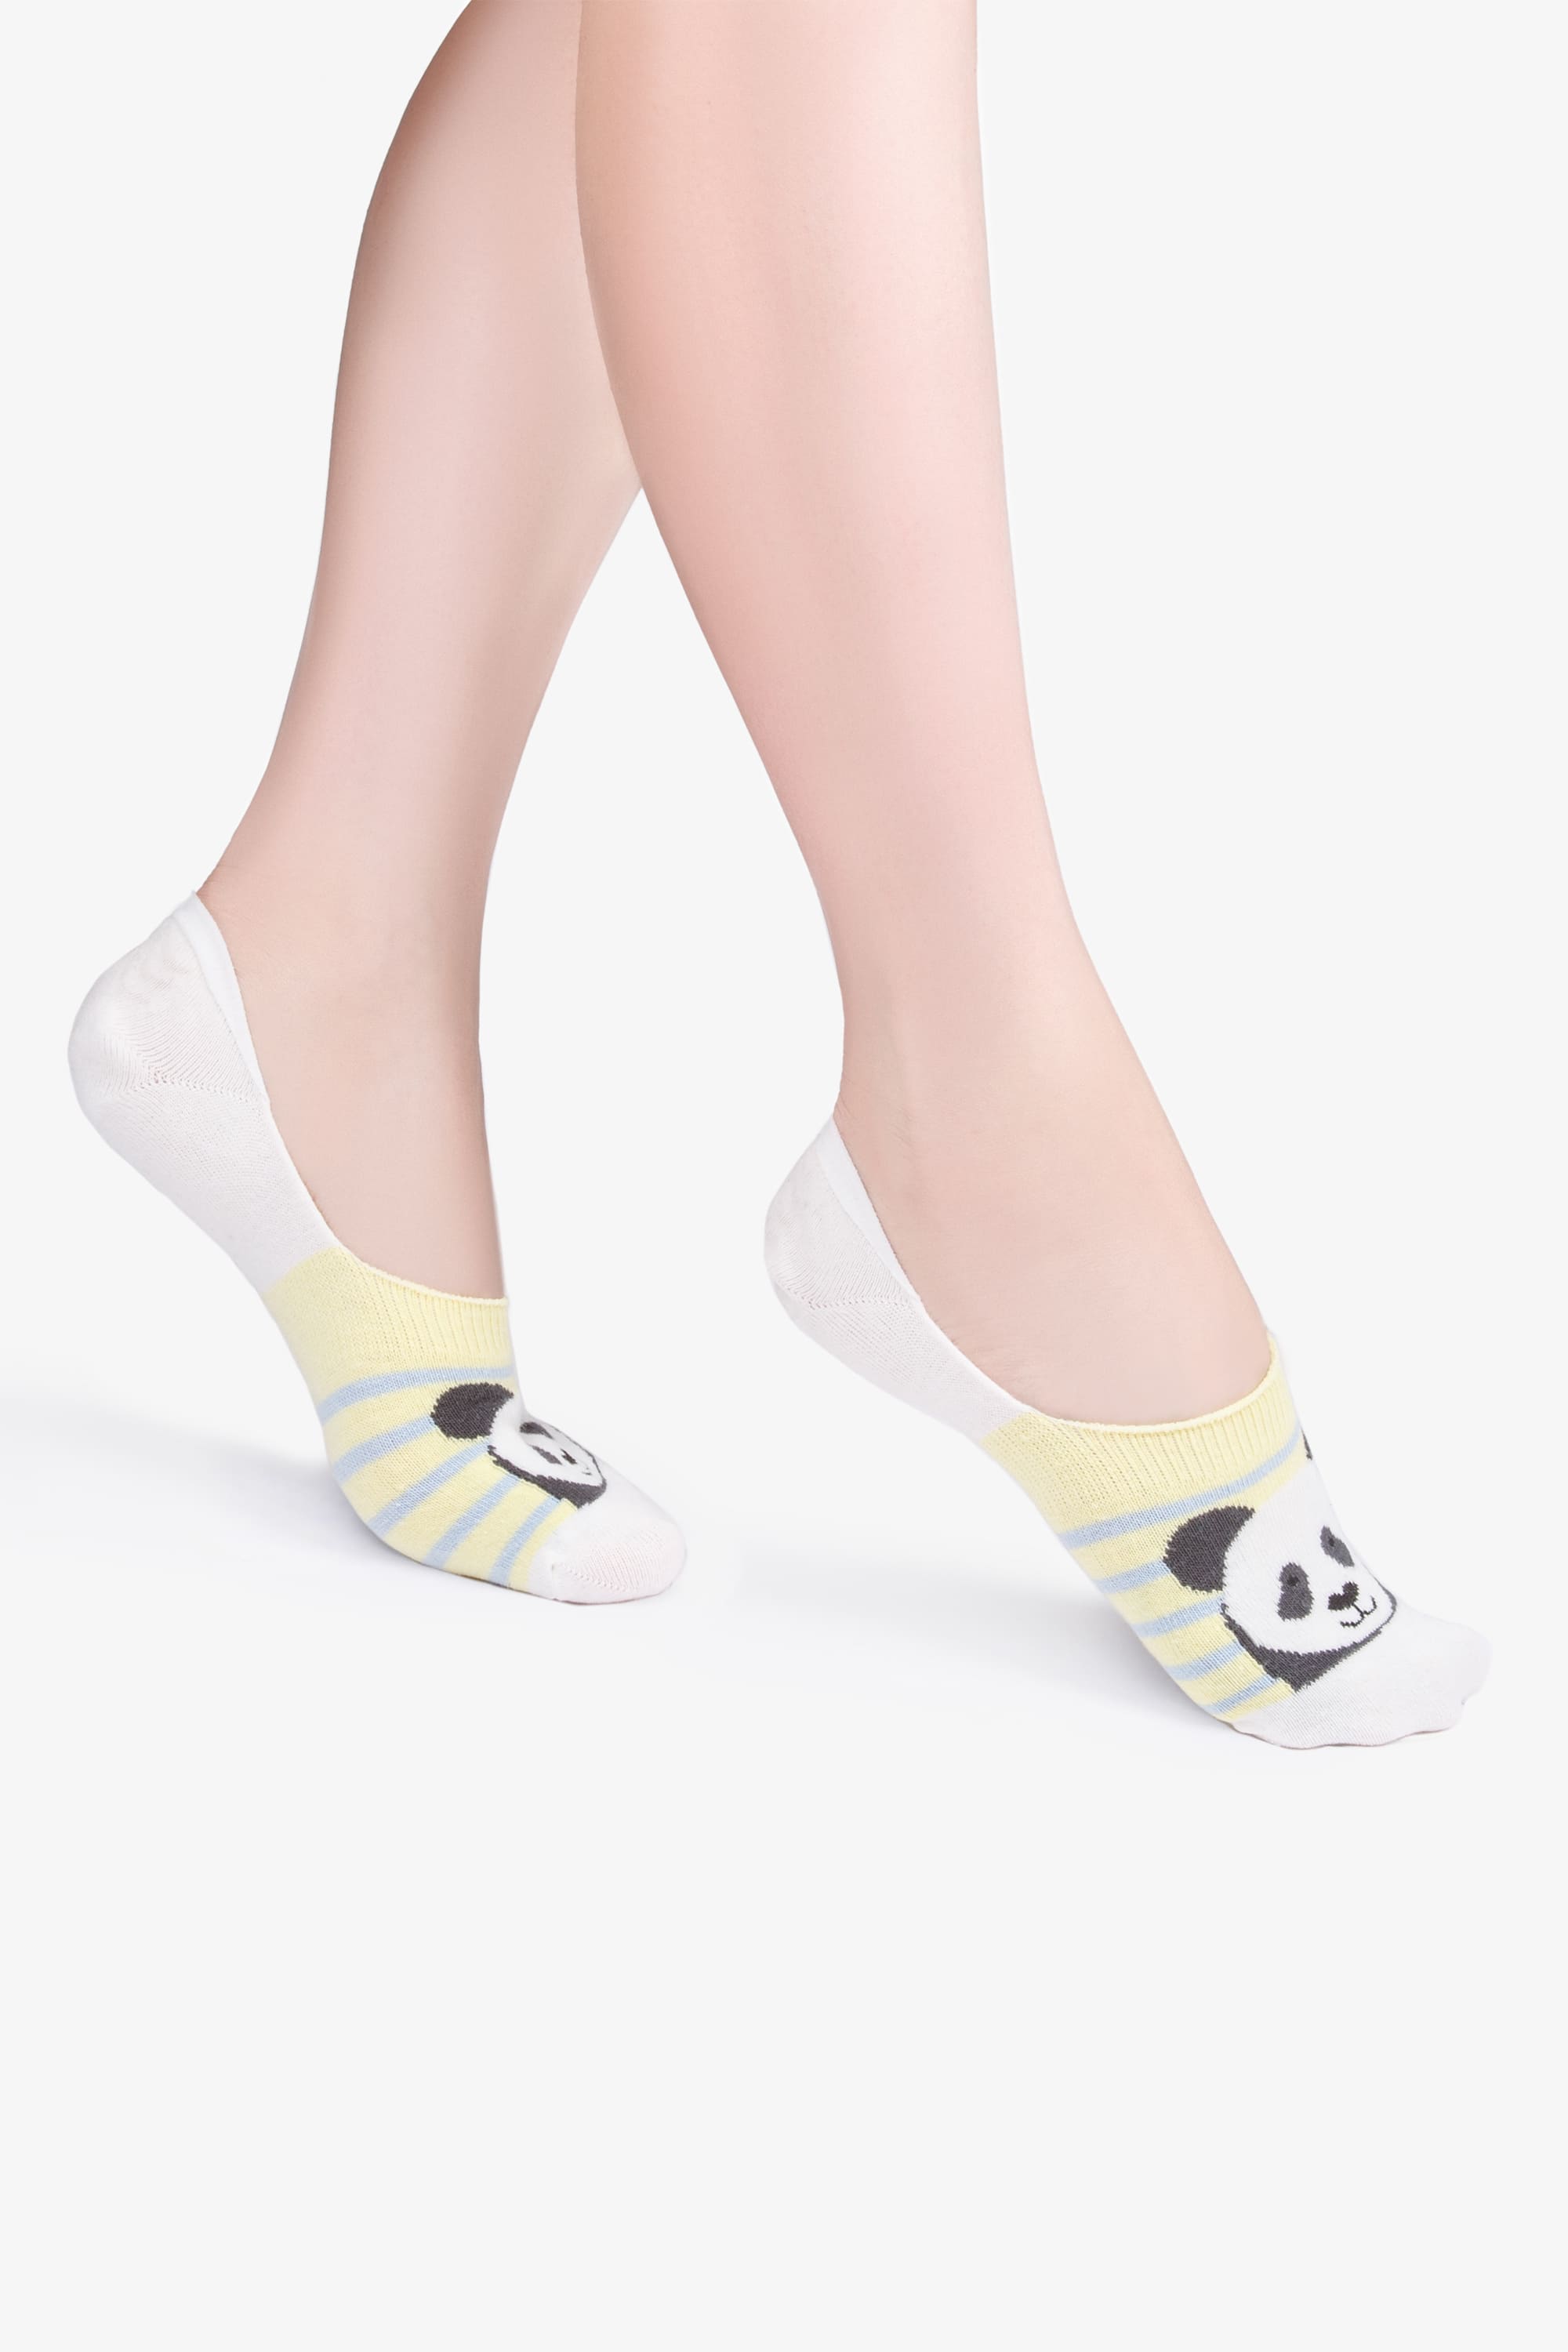 Подследники женские Socks concept SC-1622 